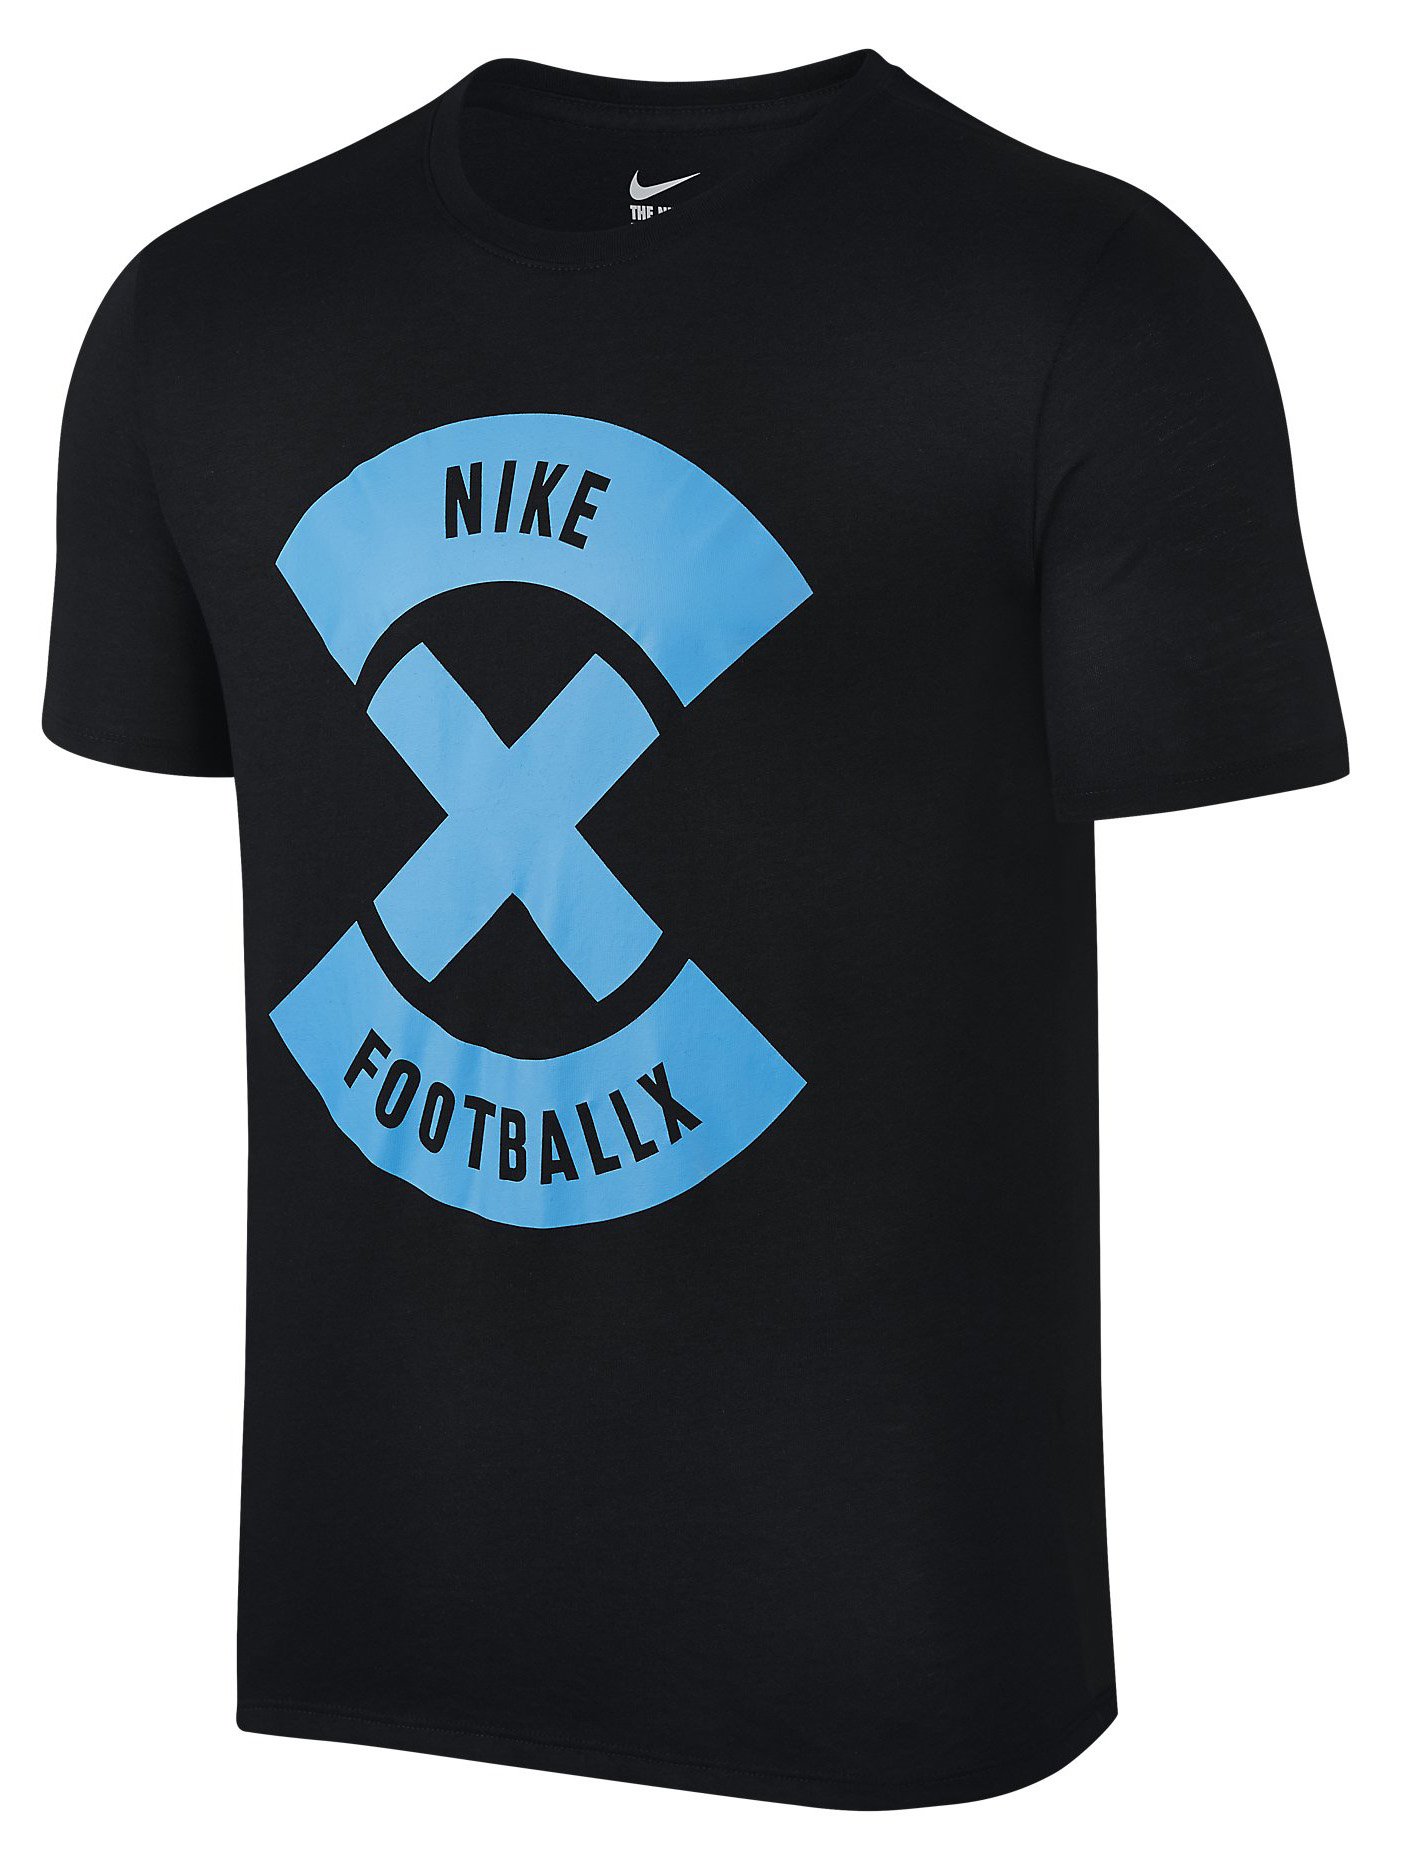 Тениска Nike FOOTBALL X GLOW